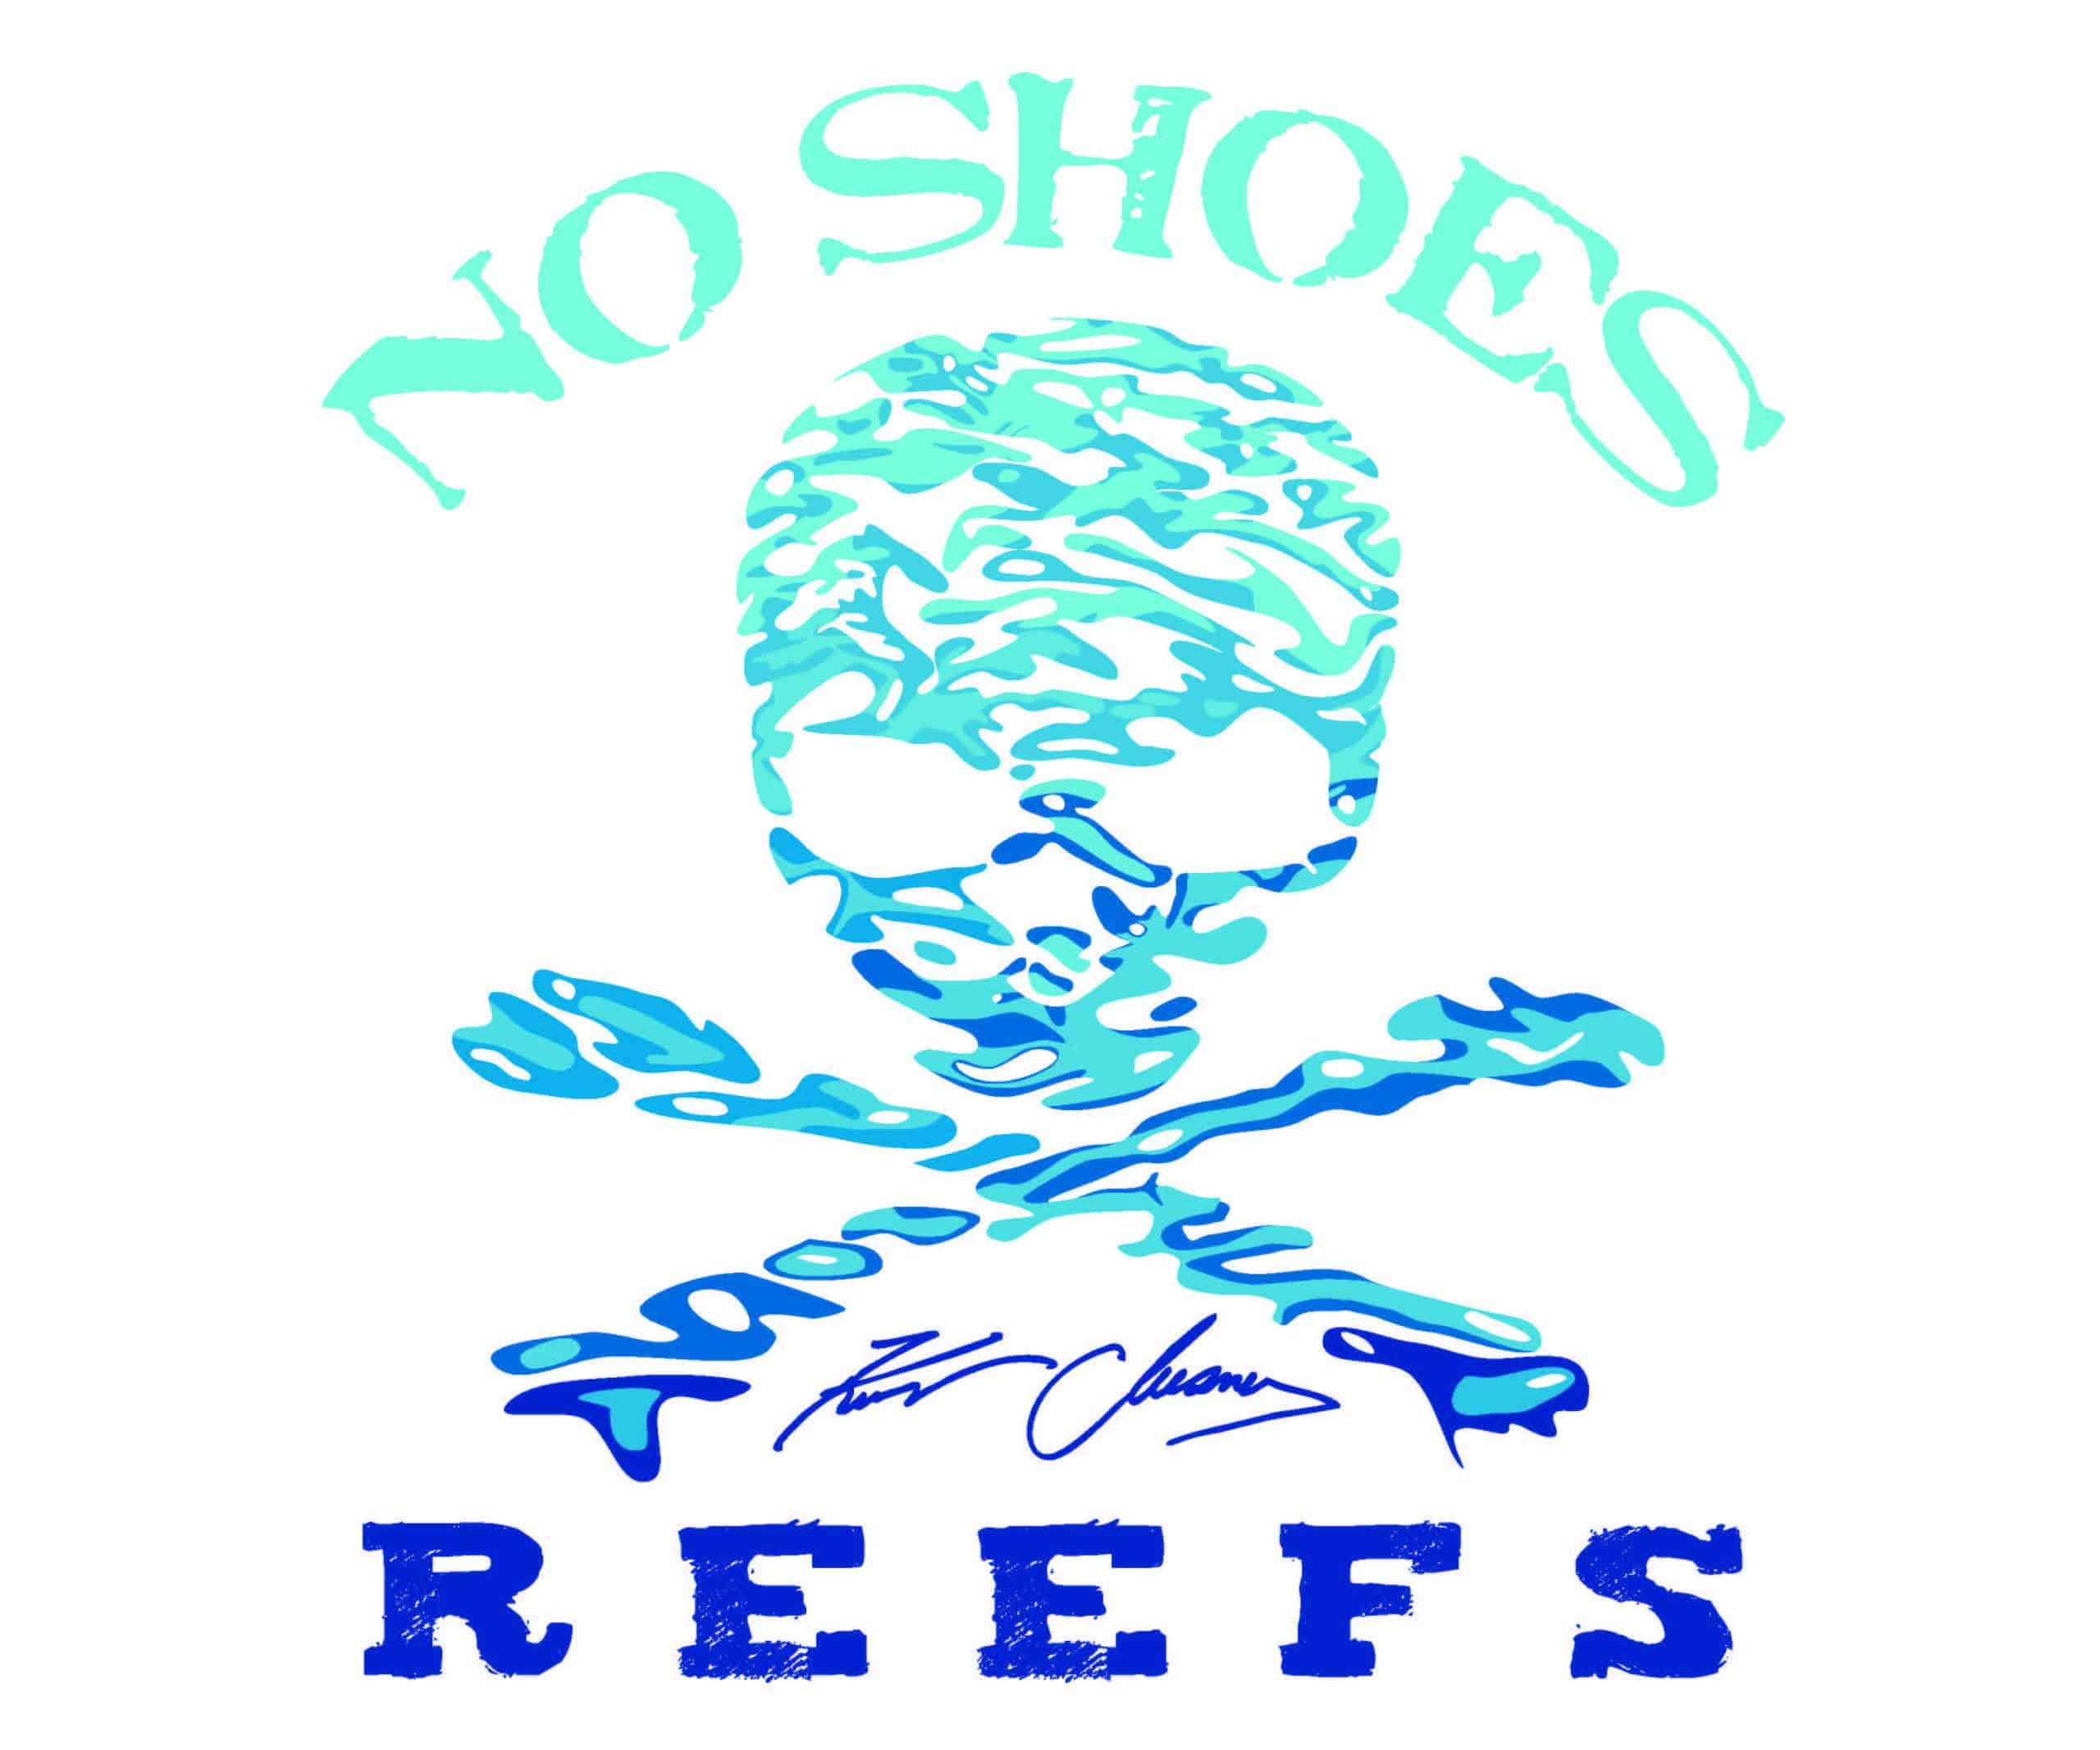 No Shoes Reefs